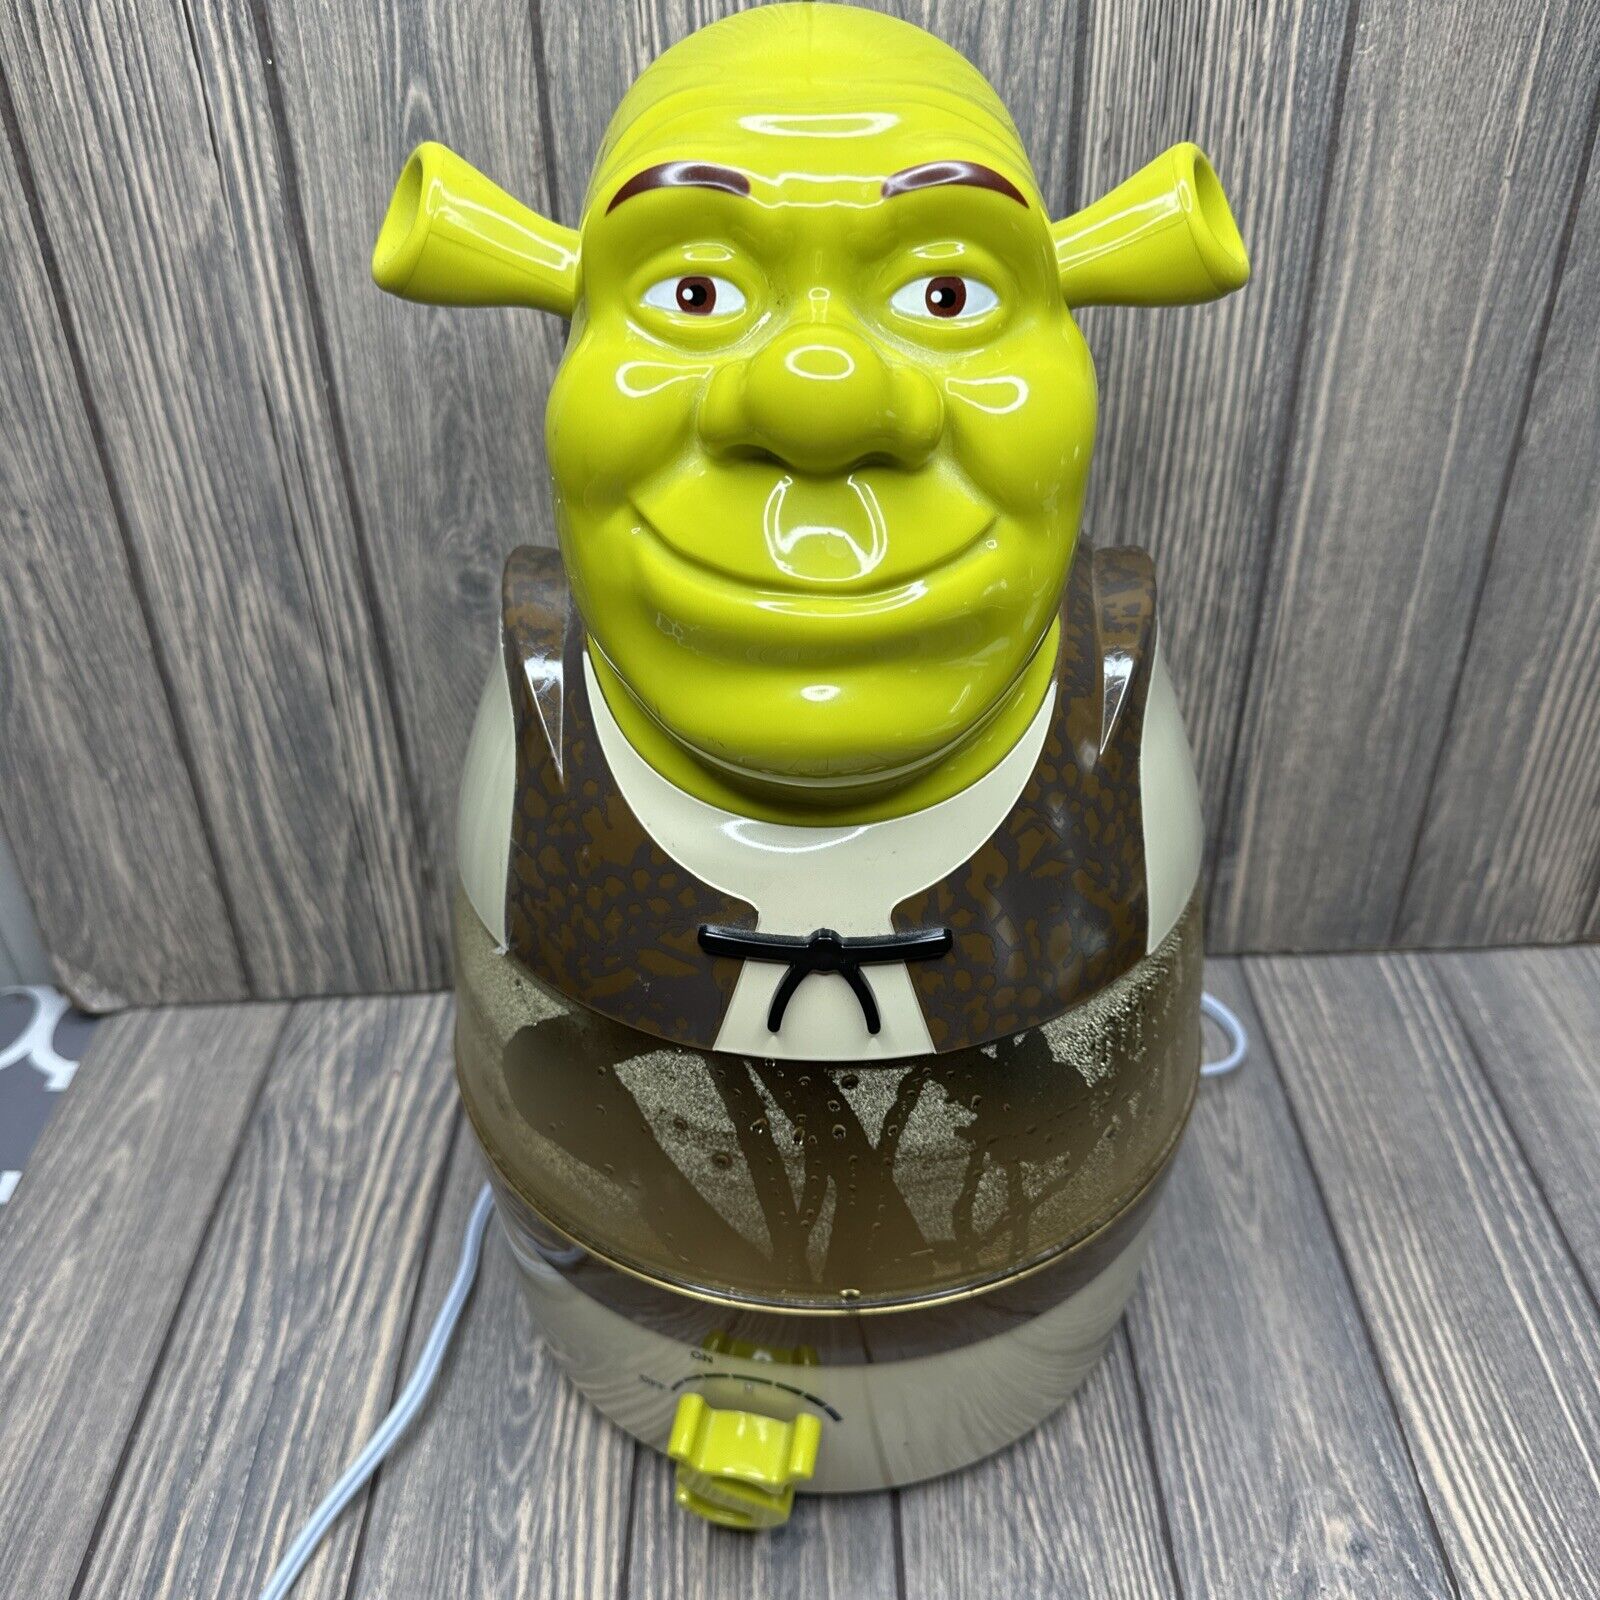 2008 Dreamworks Shrek Humidifier DFR-89001 - Tested And Works 120v Appliance